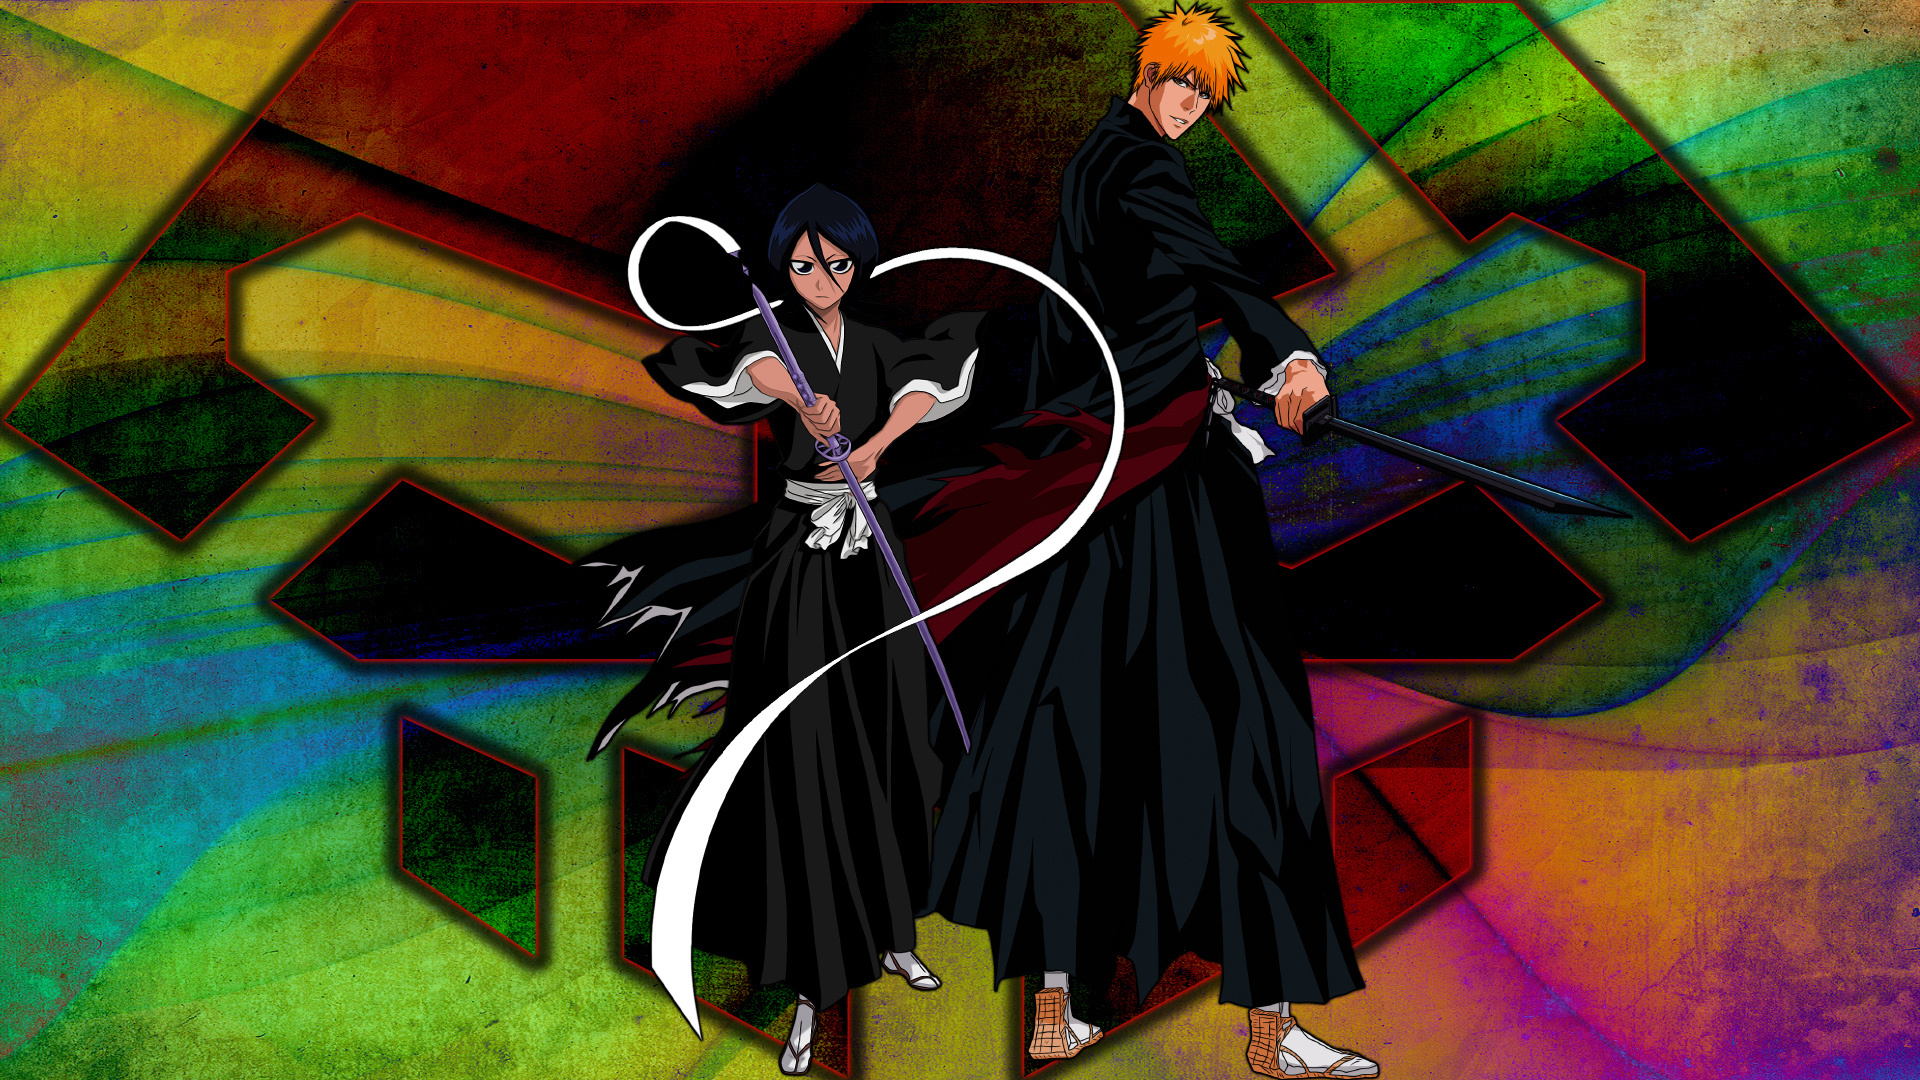 Ichigo and Rukia, Soul Reaper duo, Anime love story, Captivating artwork, 1920x1080 Full HD Desktop